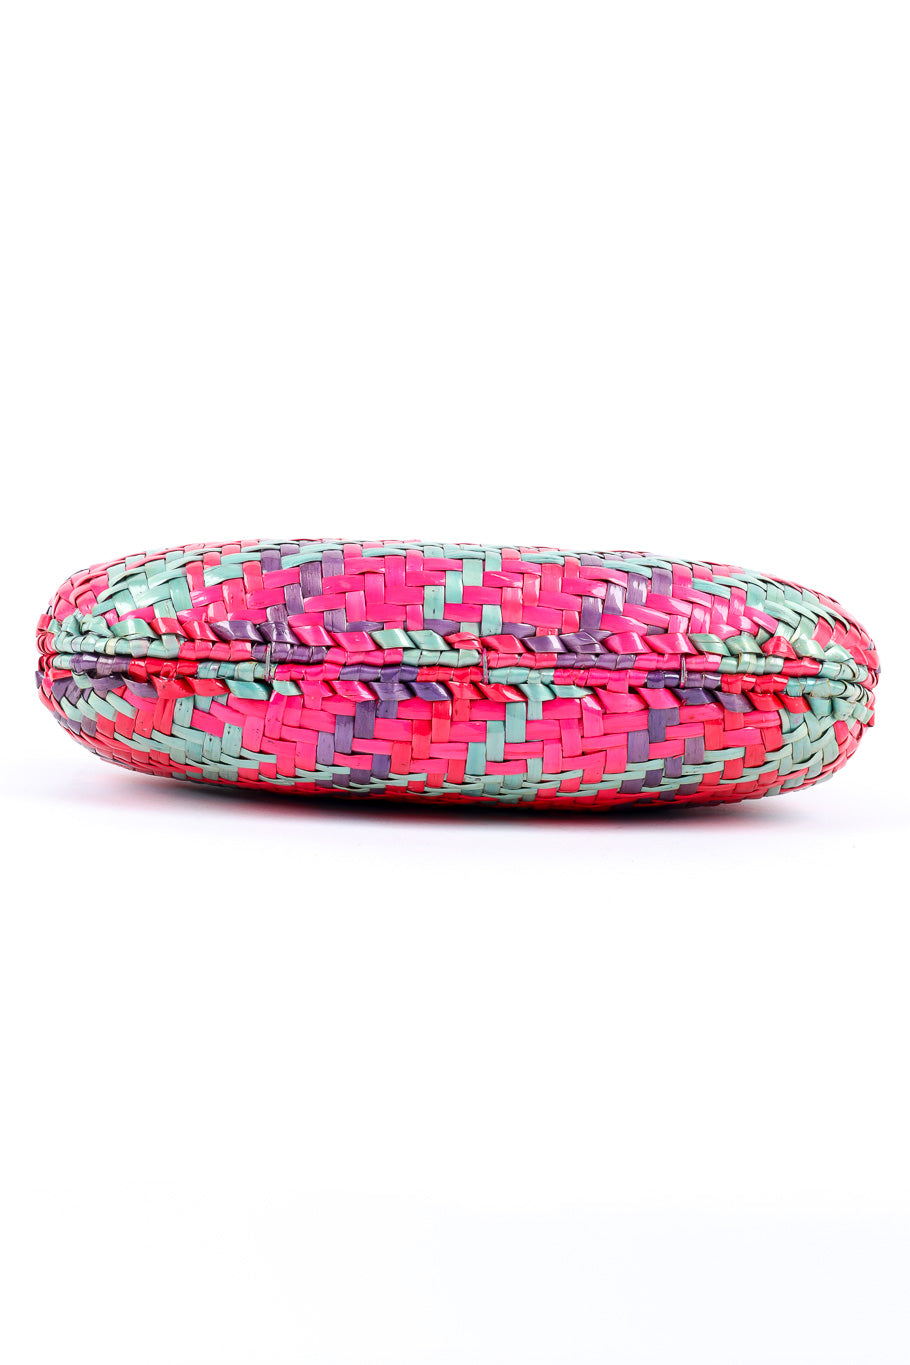 Rodo multicolor woven shoulder clutch product shot of bottom wicker details @recessla